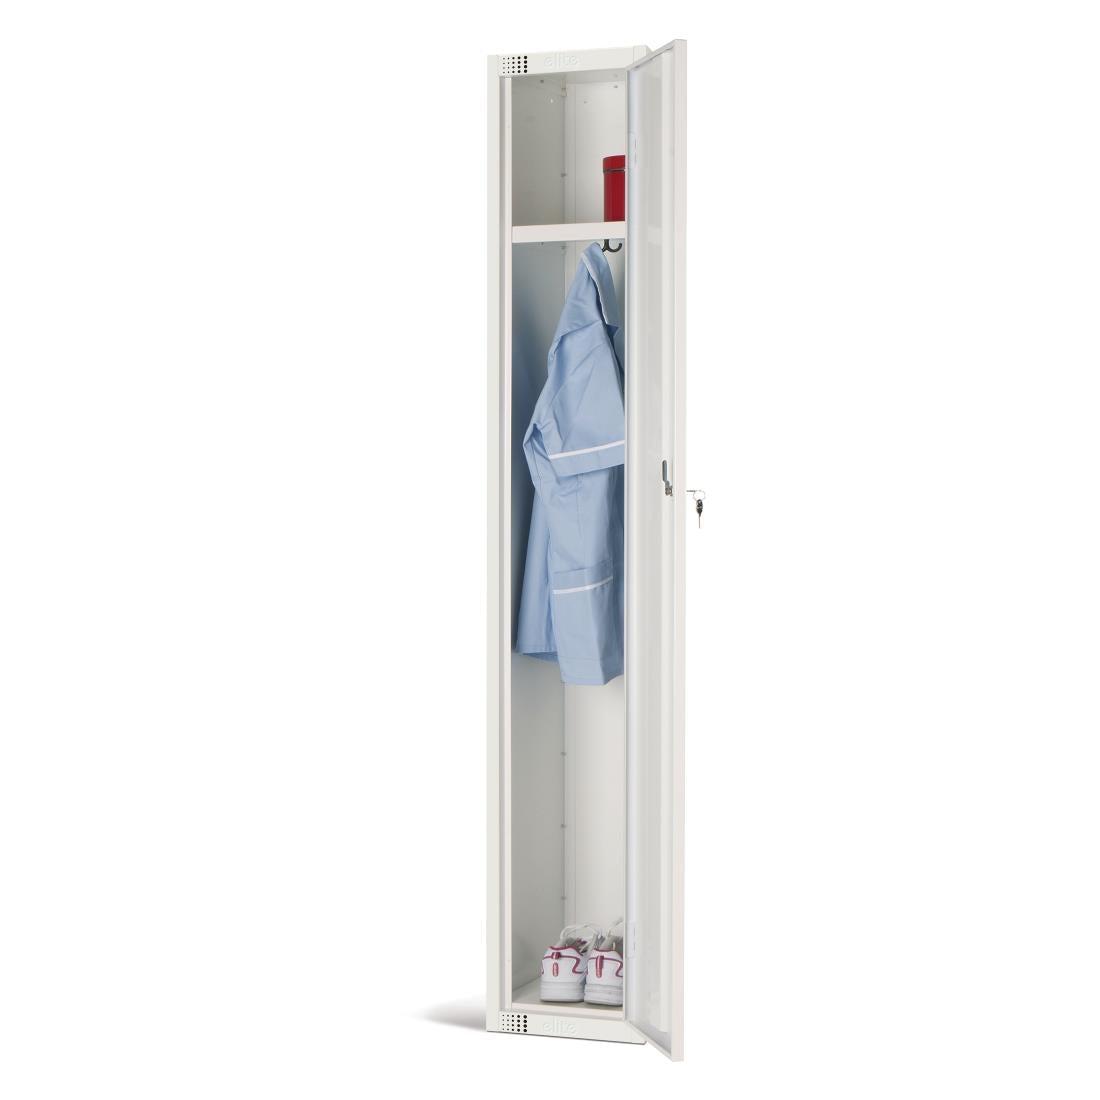 Elite Single Door Manual Combination Locker JD Catering Equipment Solutions Ltd